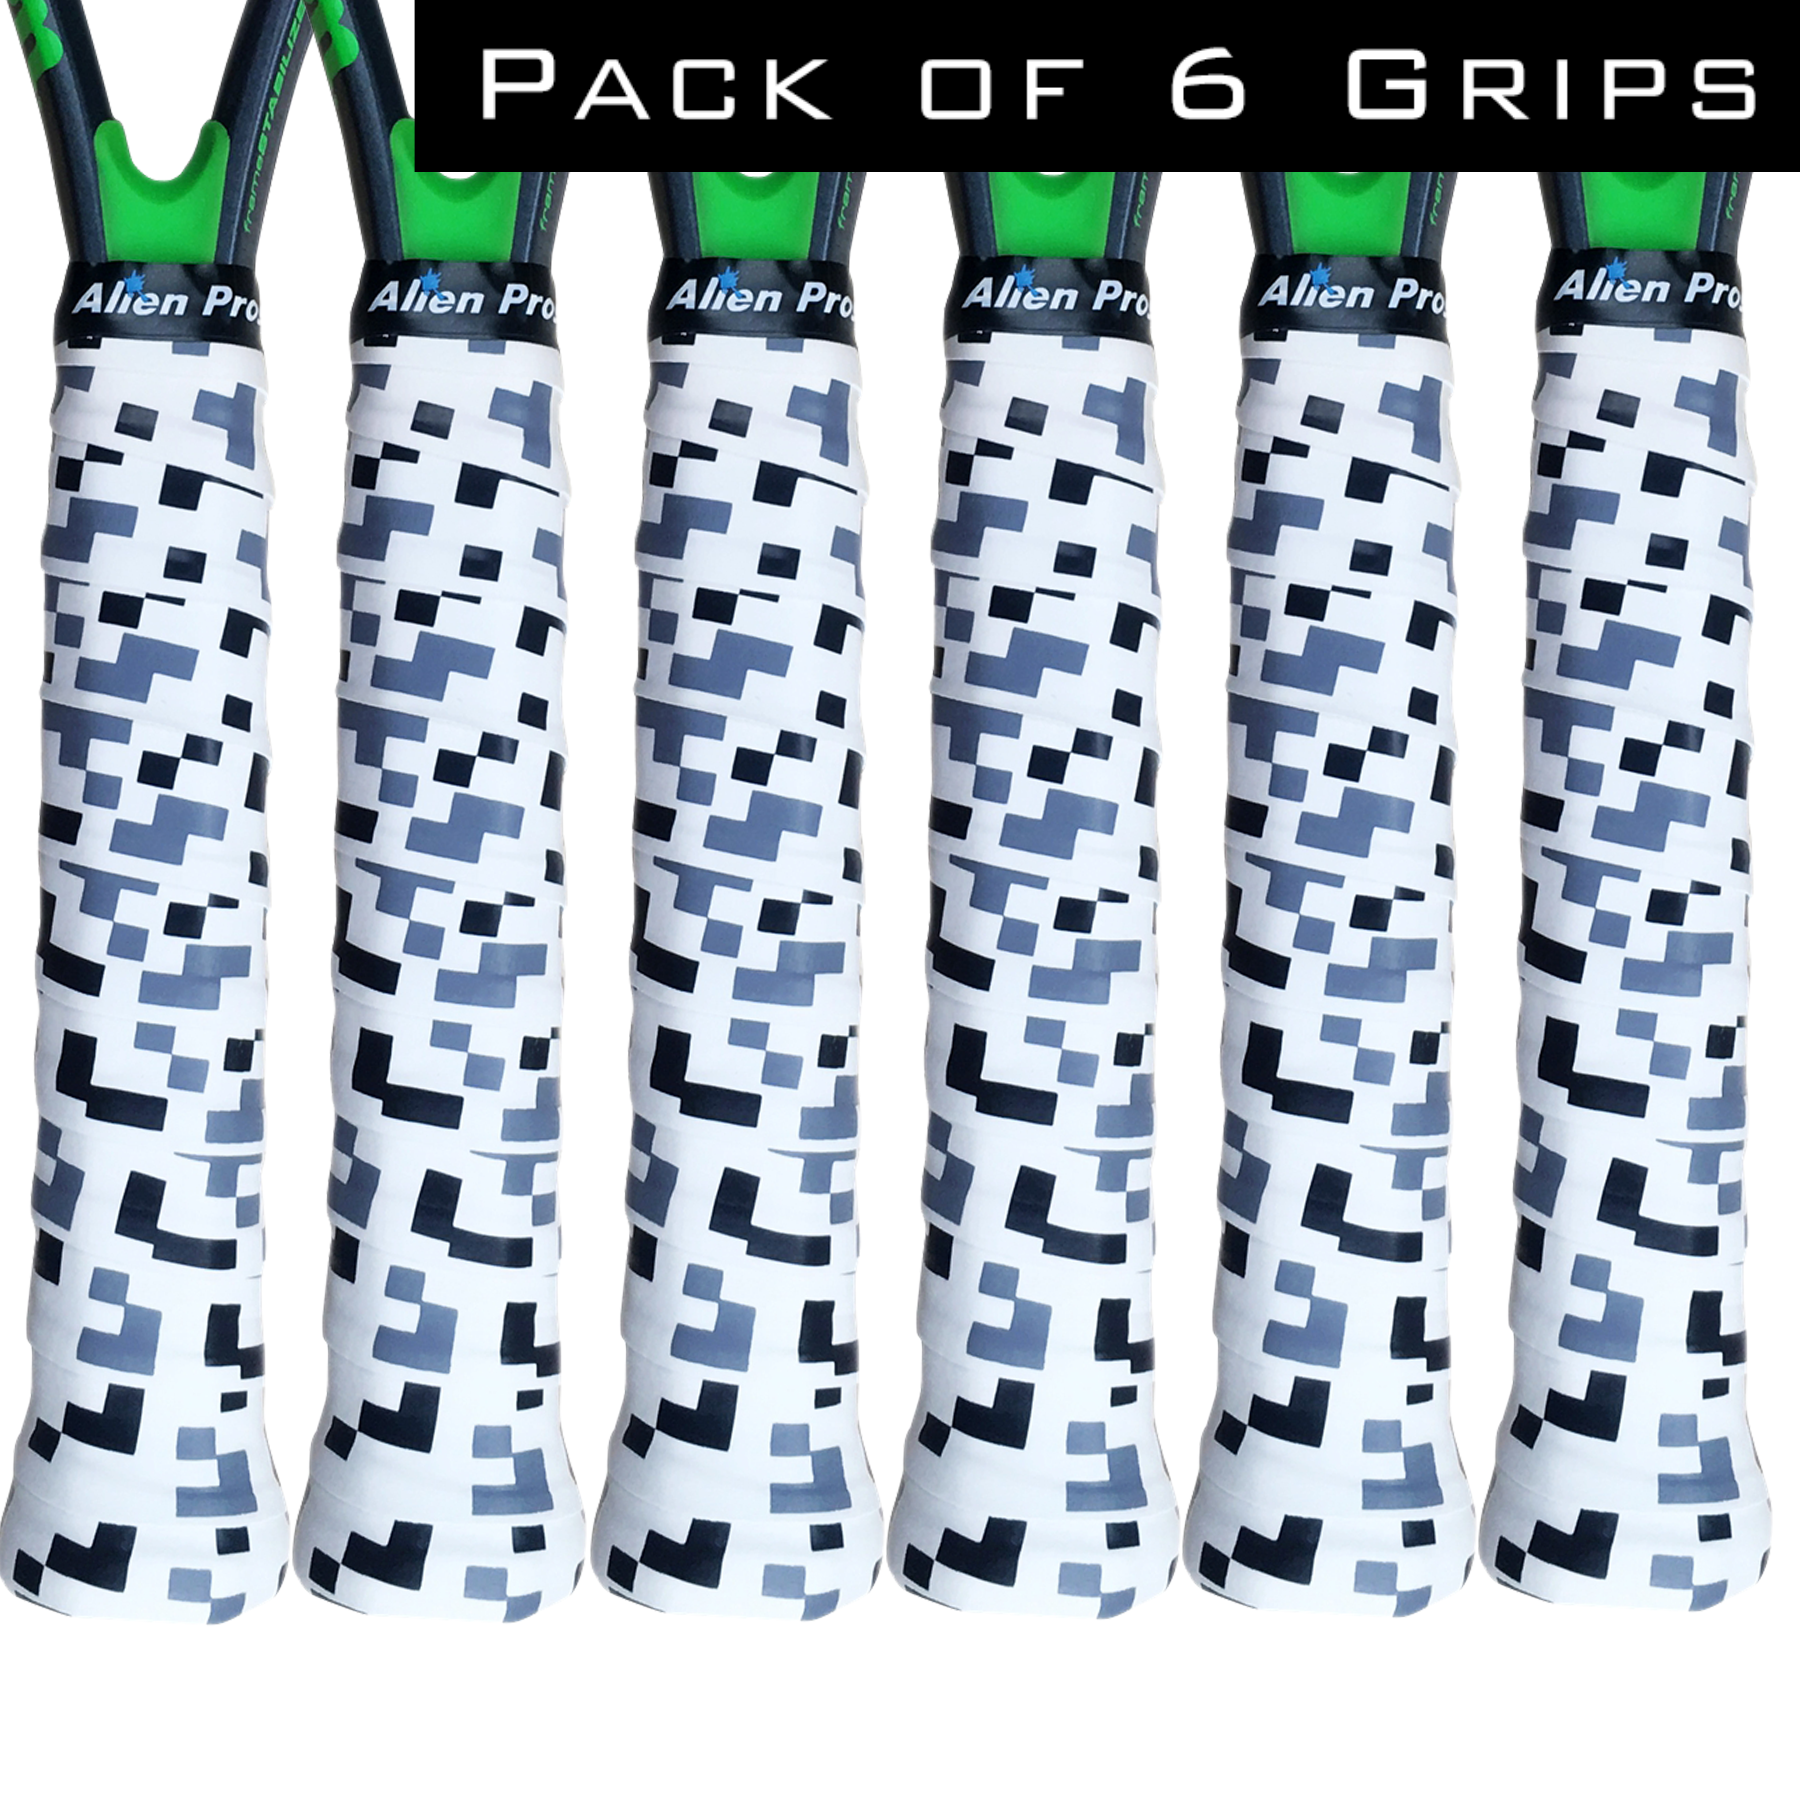 Alien Pros Tennis Racket Grip Tape (6 Grips) – Precut and Dry Feel